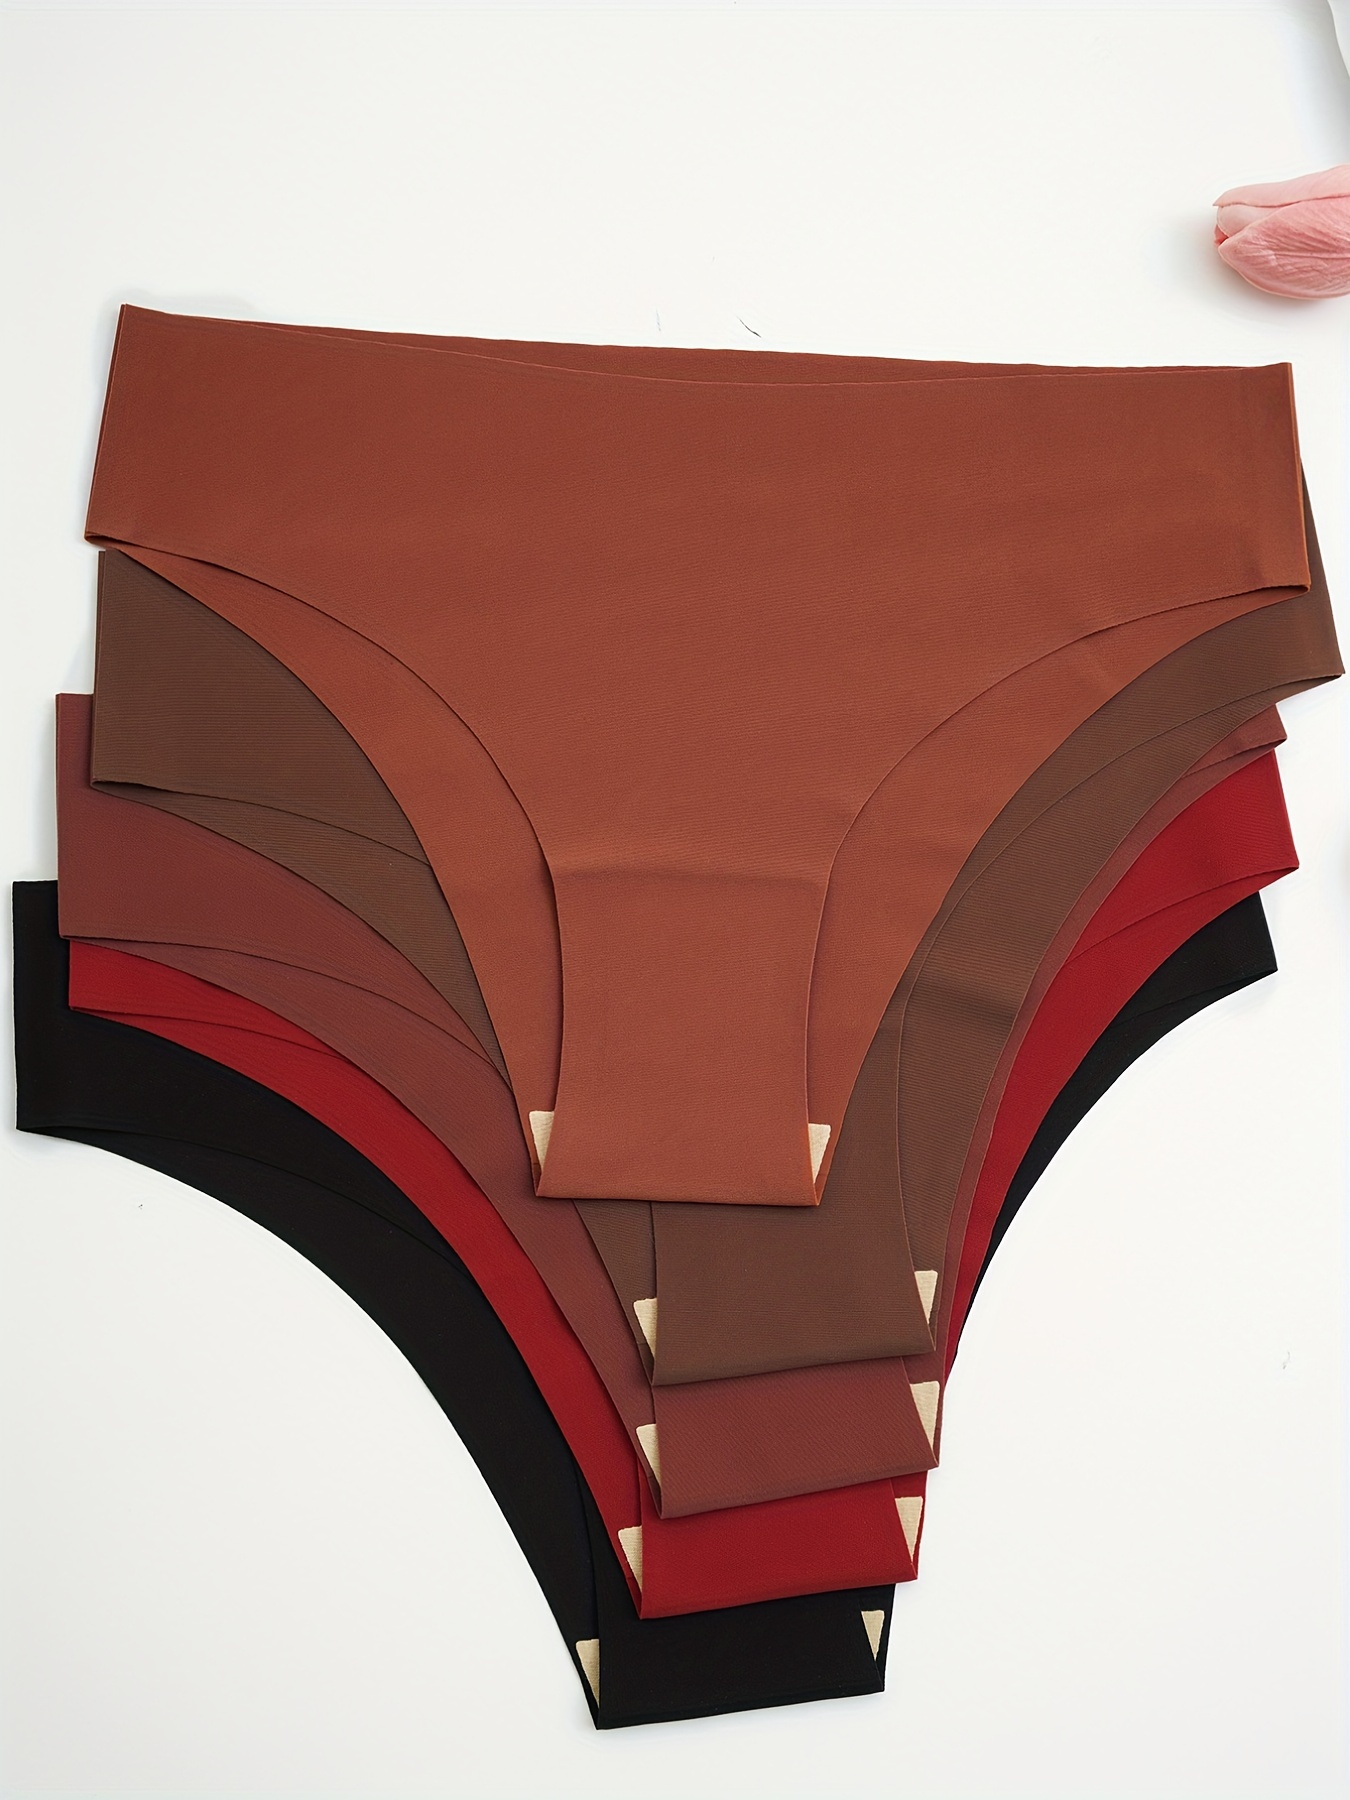 5pcs Disposable Triangular Cotton Briefs, Comfort & Breathable Intimates  Panties For Travel, Women's Lingerie & Underwear